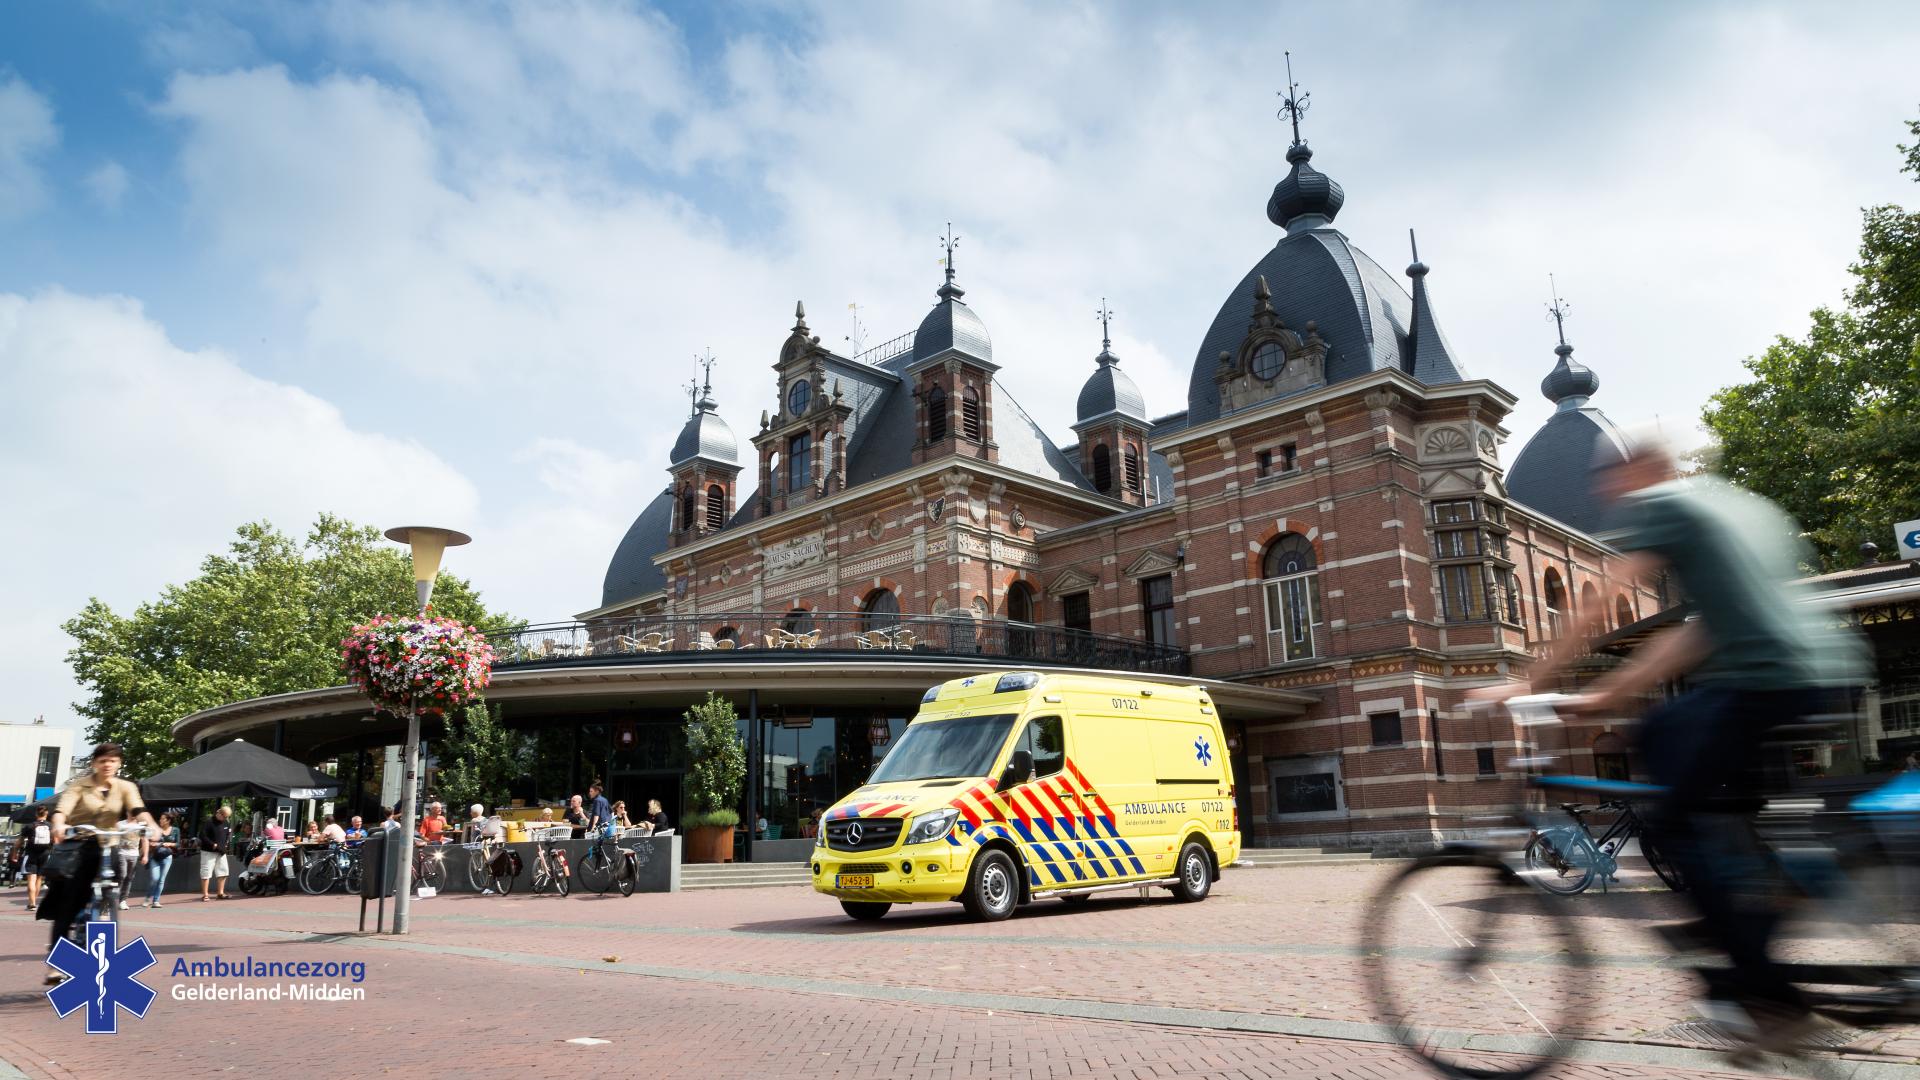 Ambulance in de stad Arnhem